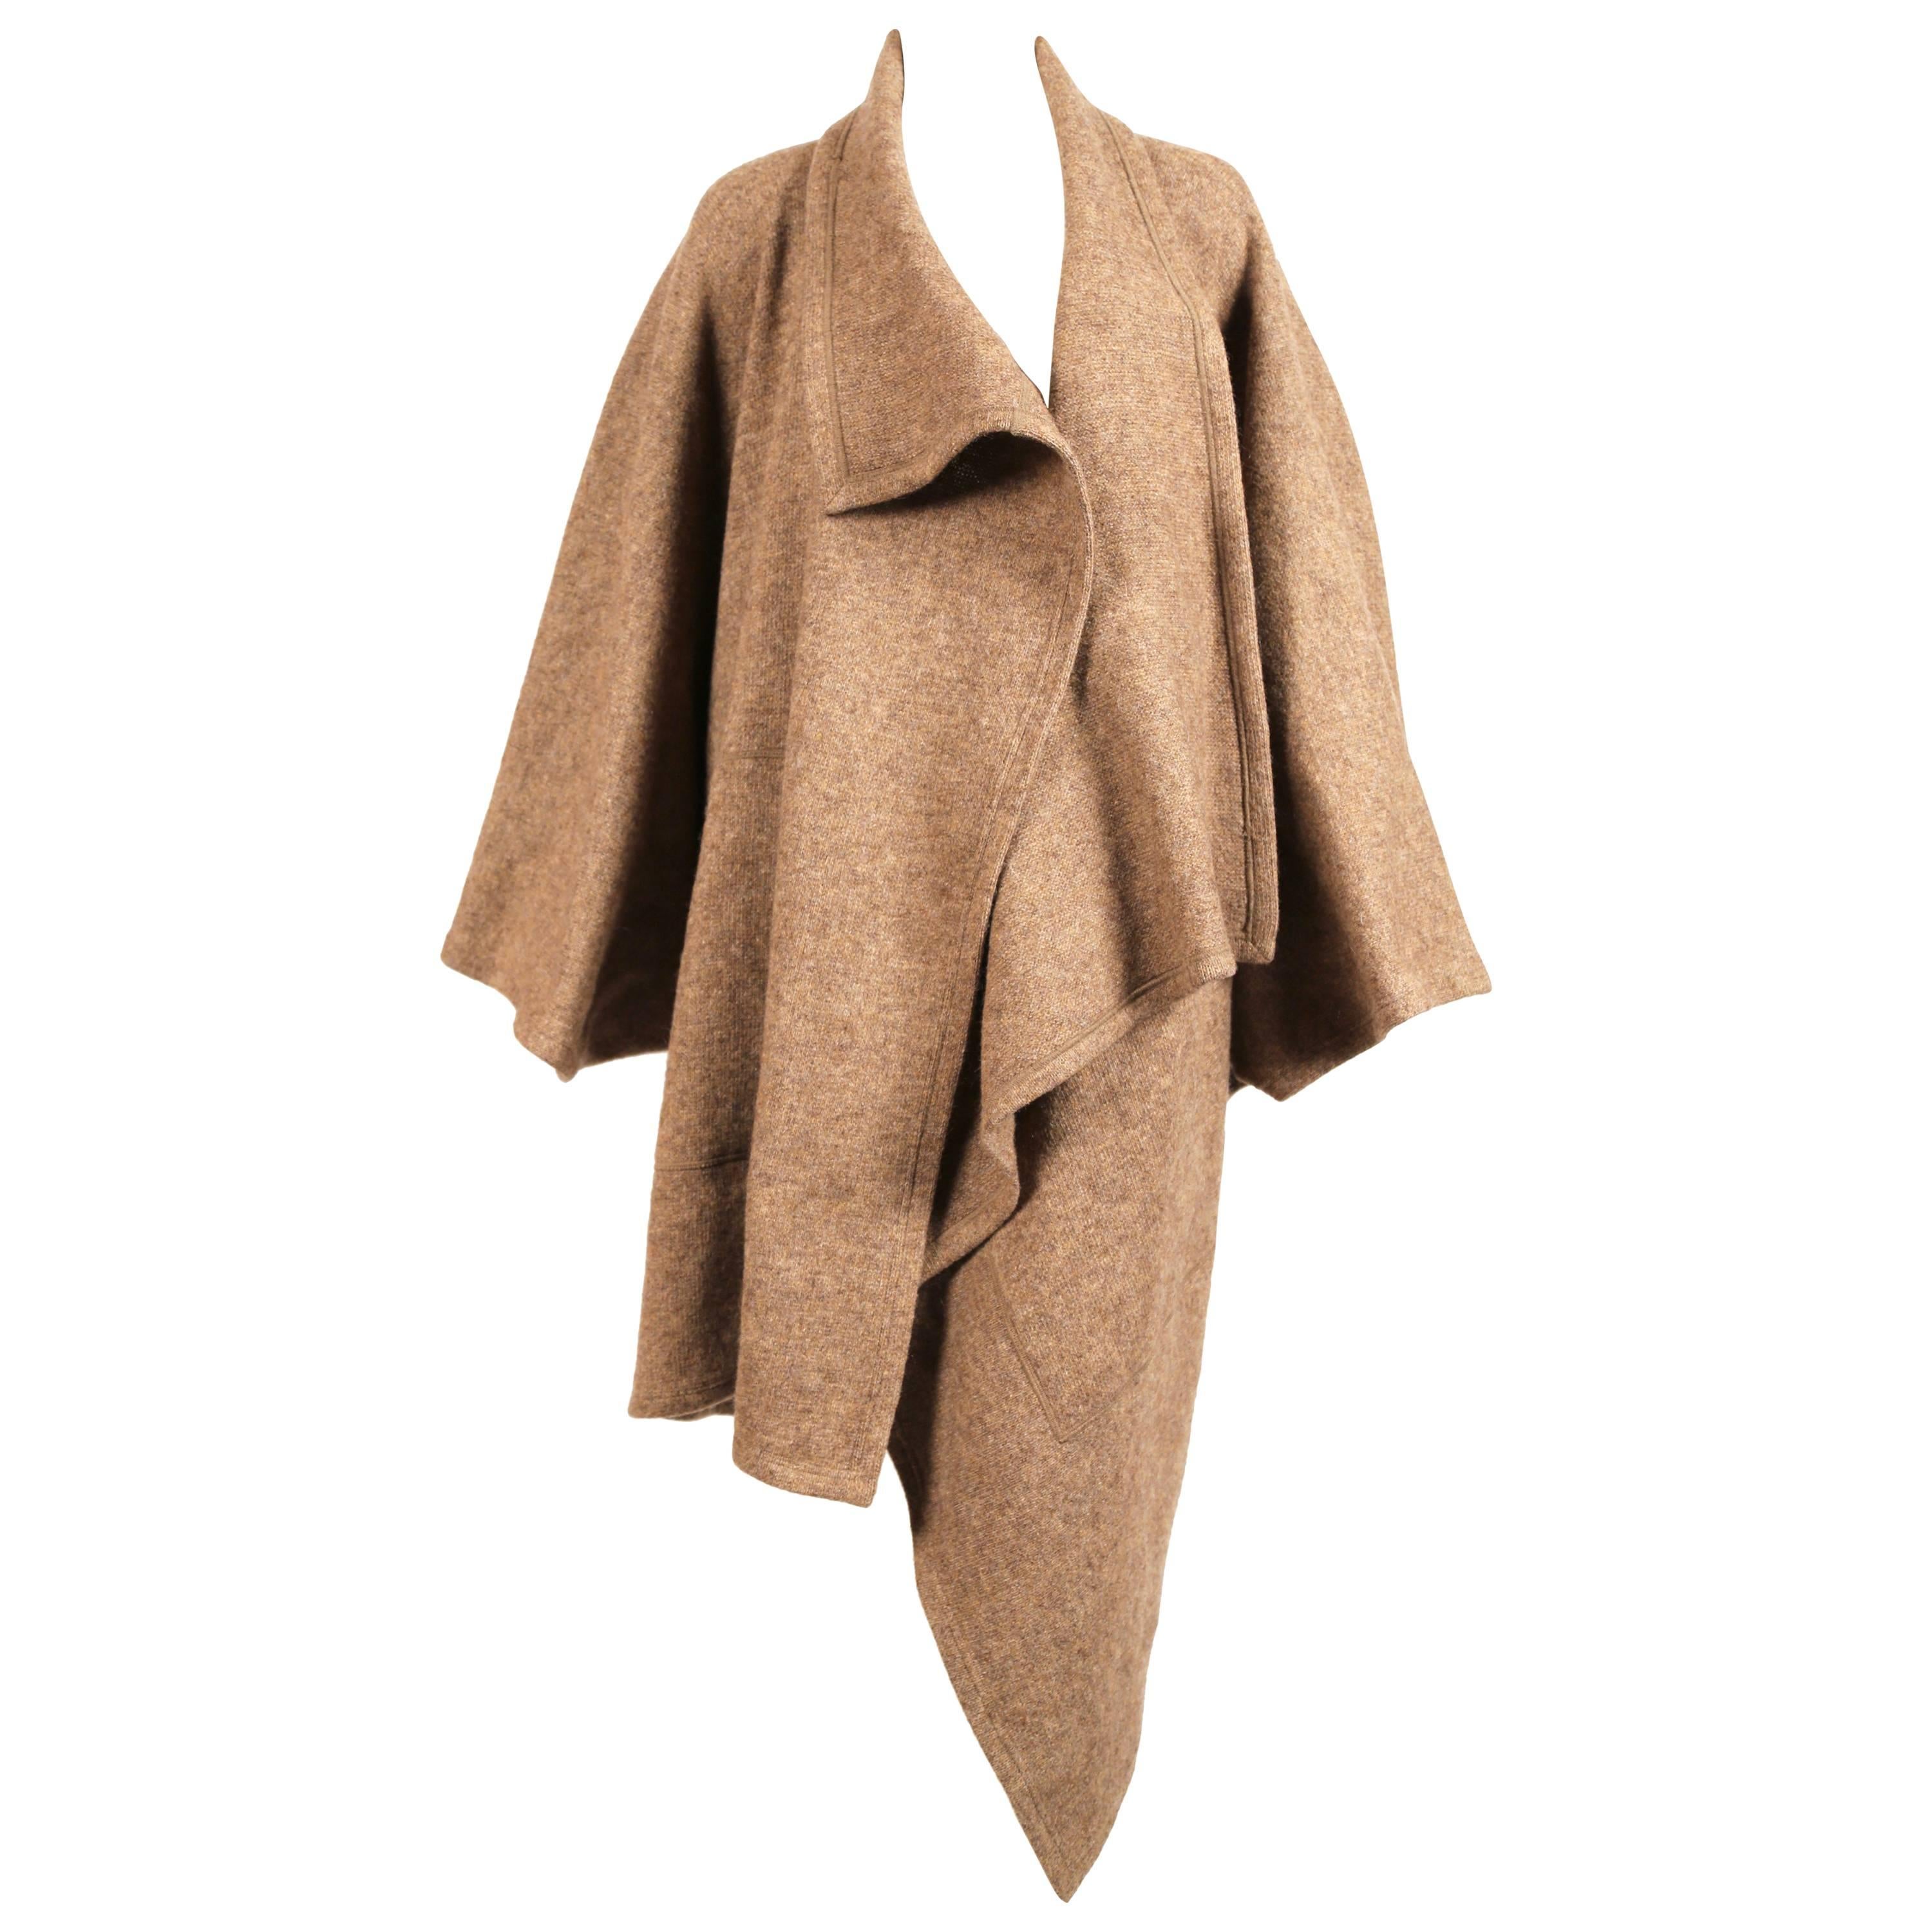 1984 ISSEY MIYAKE draped wool cocoon runway coat